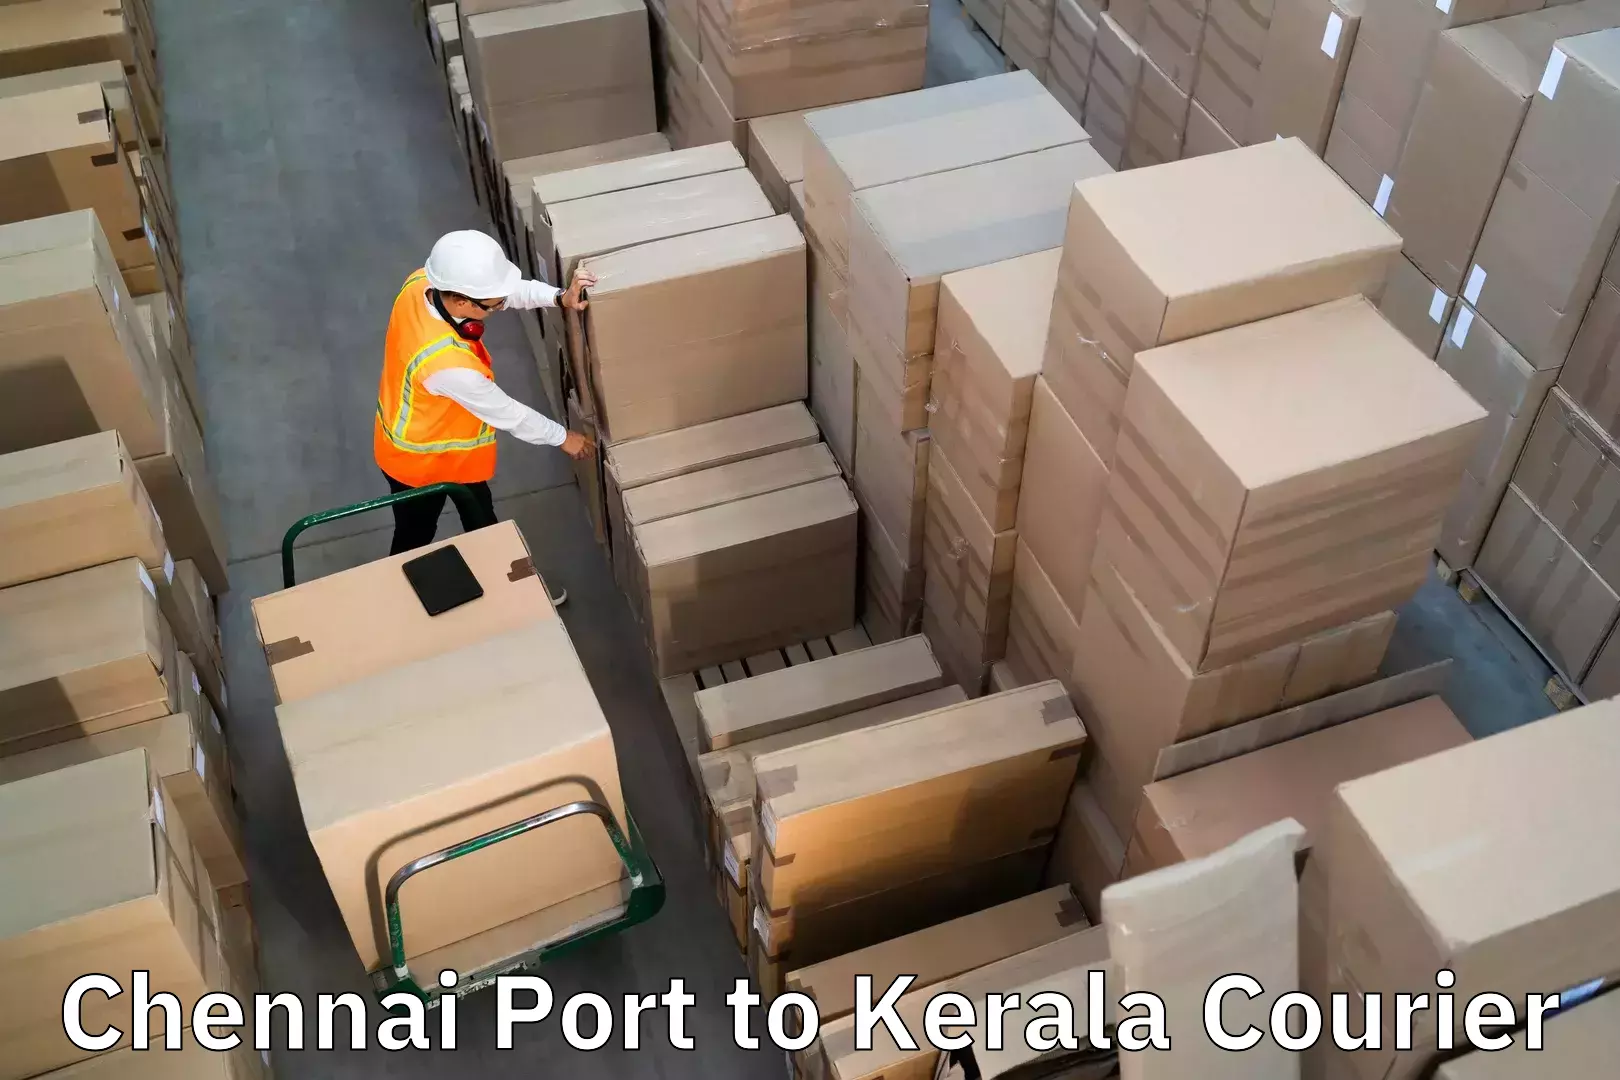 Luggage transport consultancy Chennai Port to Kalanjoor